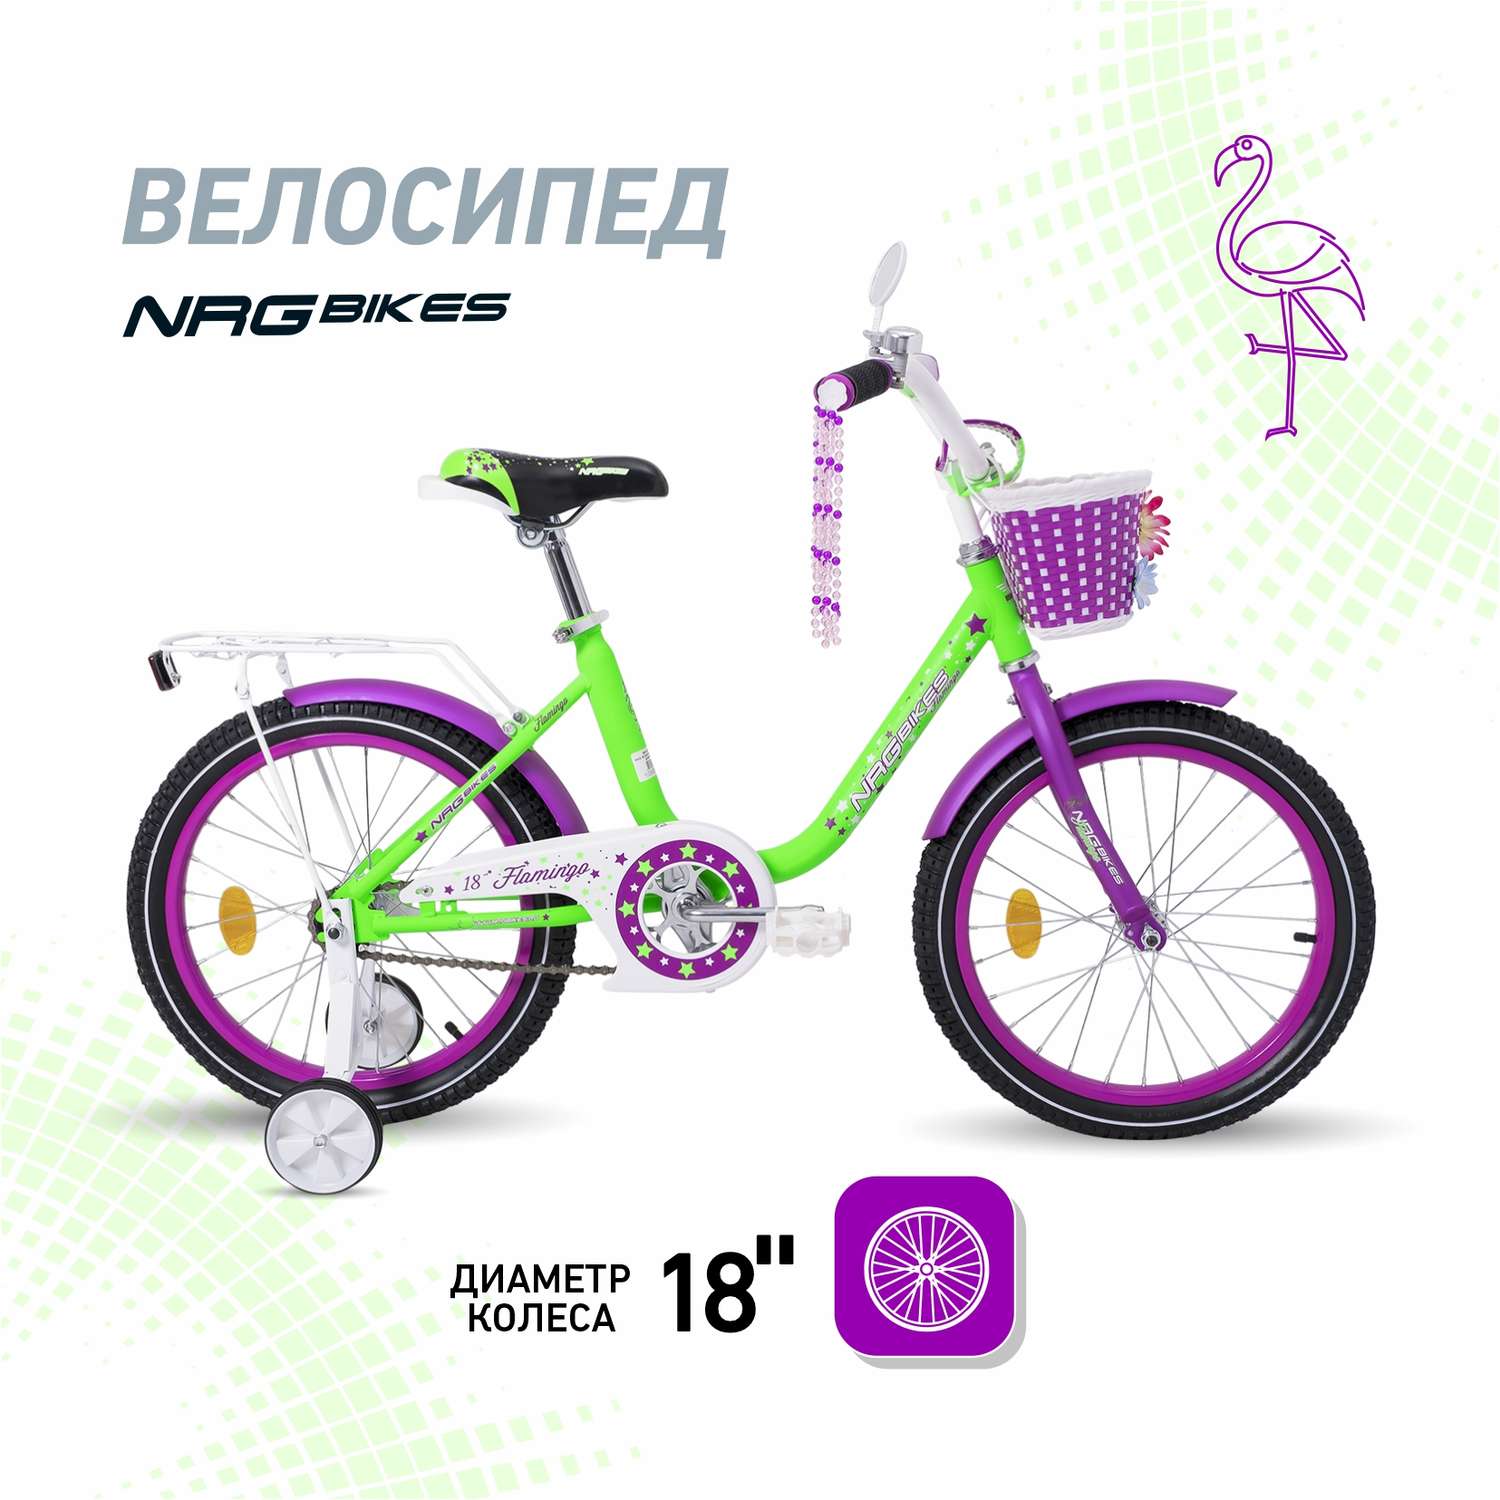 Велосипед NRG BIKES FLAMINGO 18 green-violet - фото 1